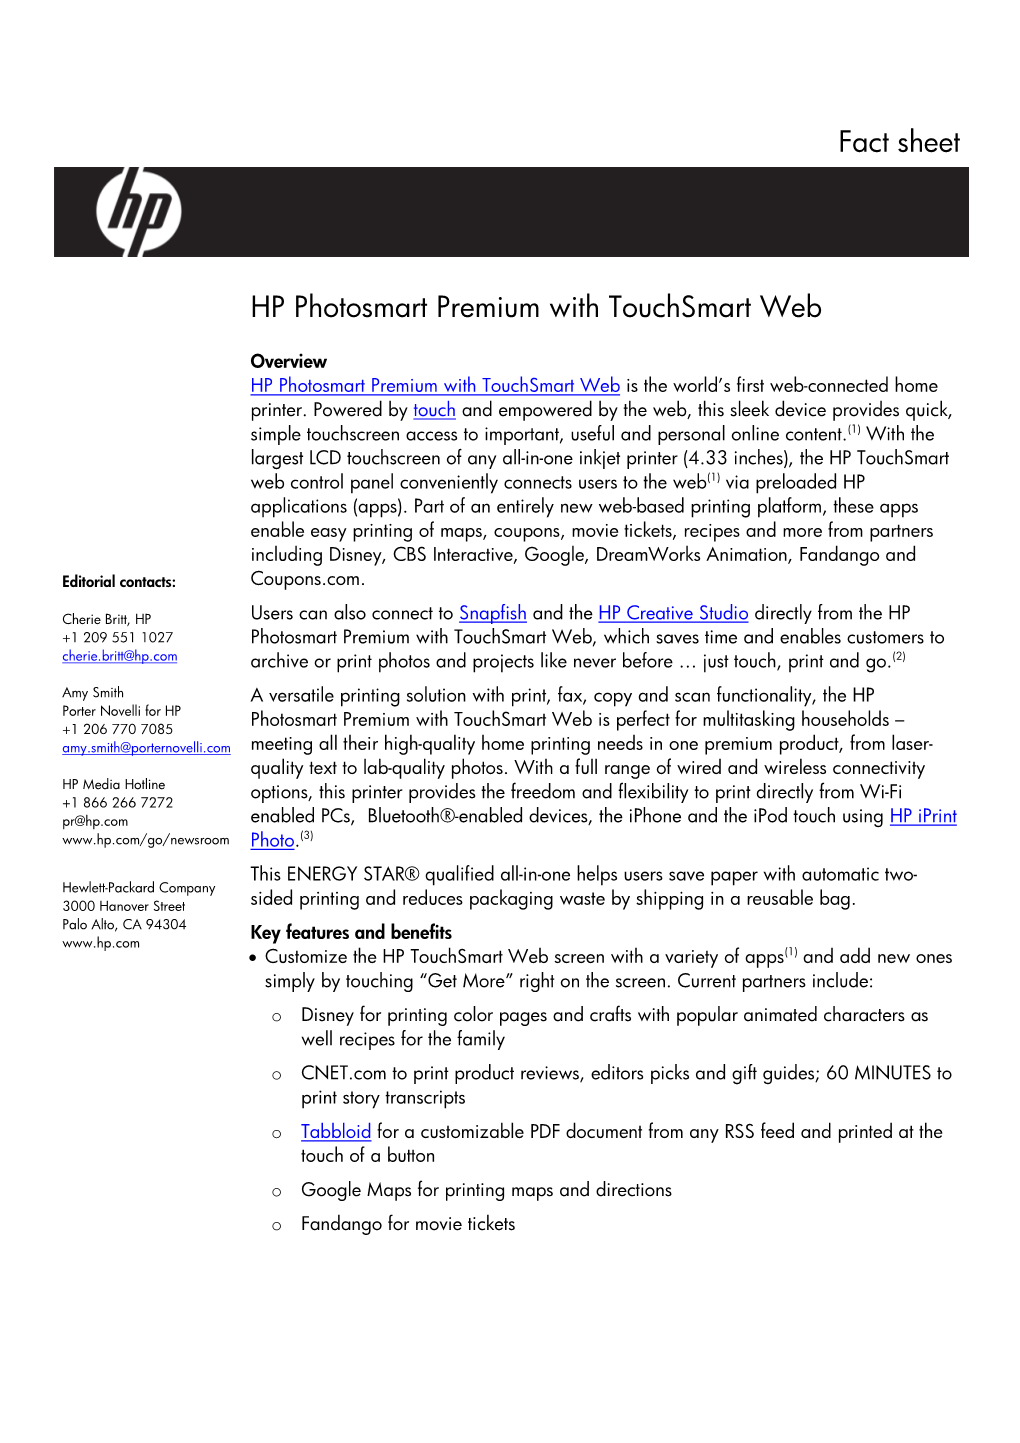 Fact Sheet HP Photosmart Premium with Touchsmart